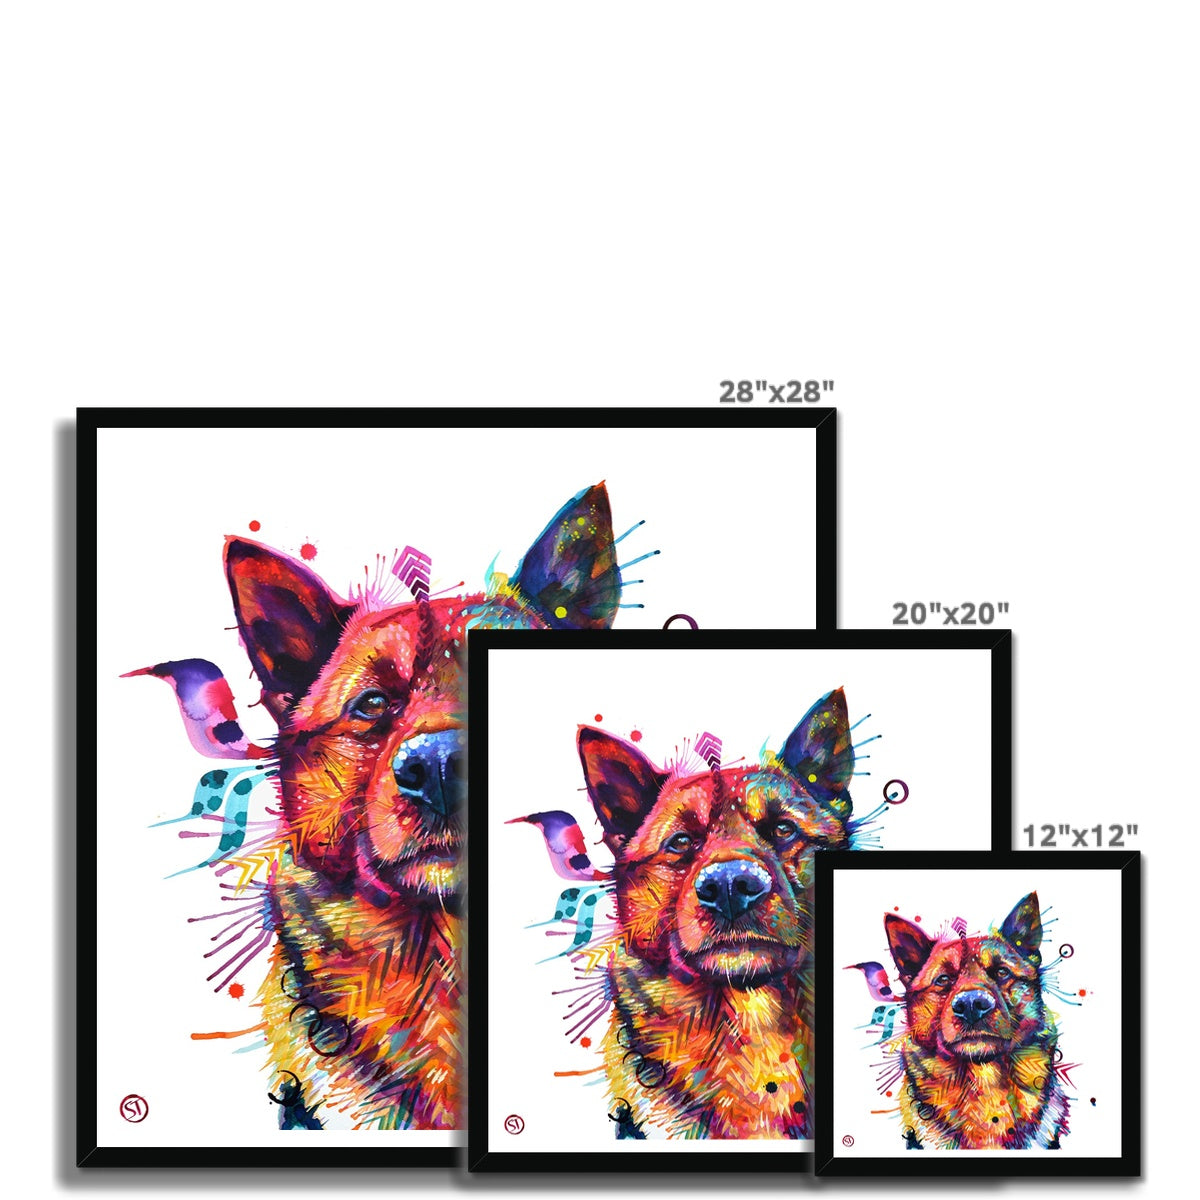 Wall Art | Dog Portrait | Pet Portrait Artists | Animal Print | Framed Art | Dog Artwork